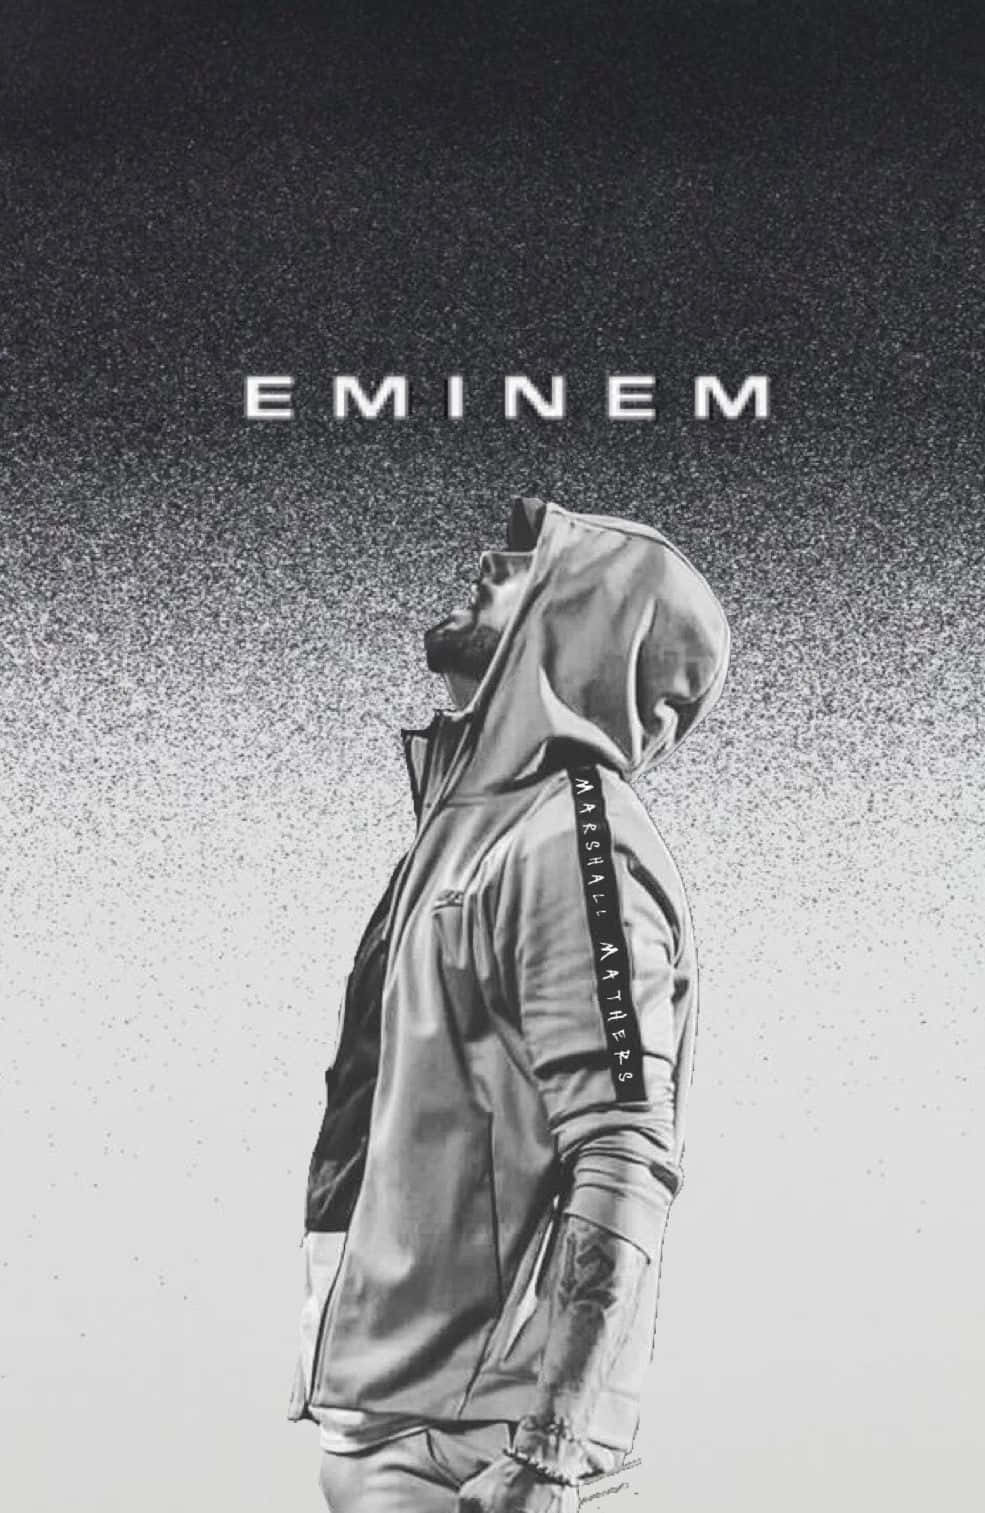 Eminem985 X 1513 Bakgrund